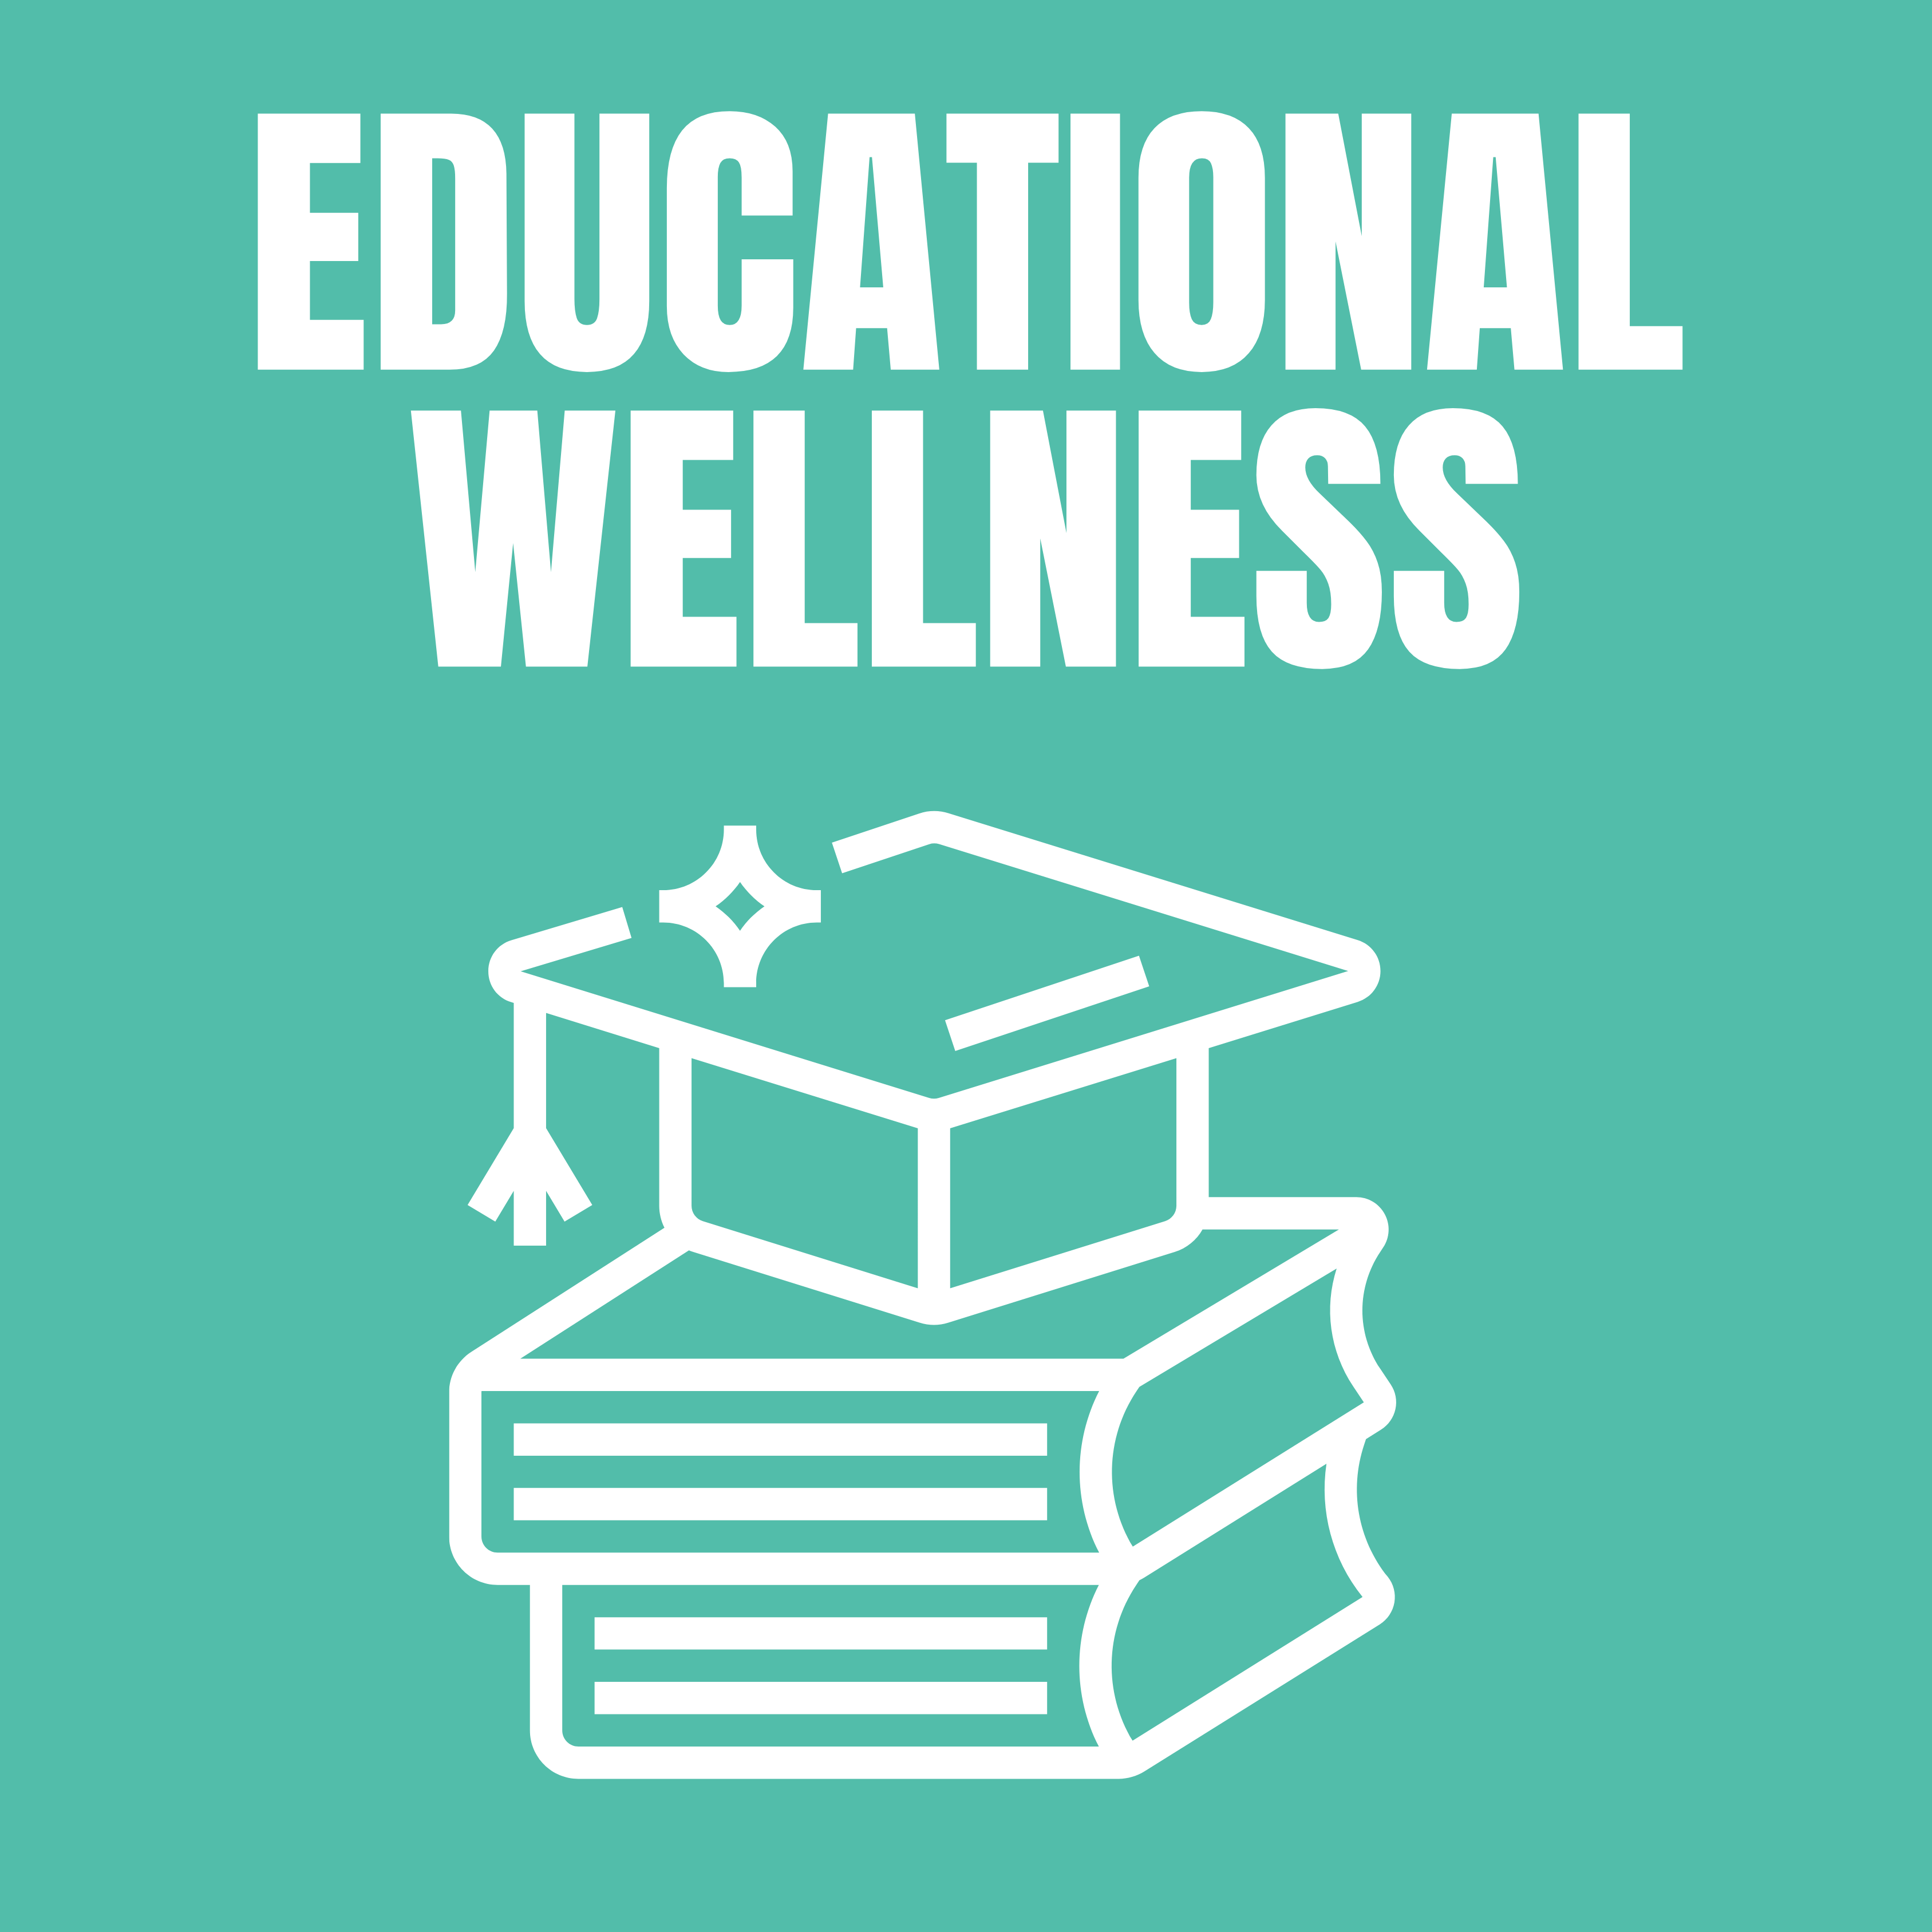 Educational wellness icon